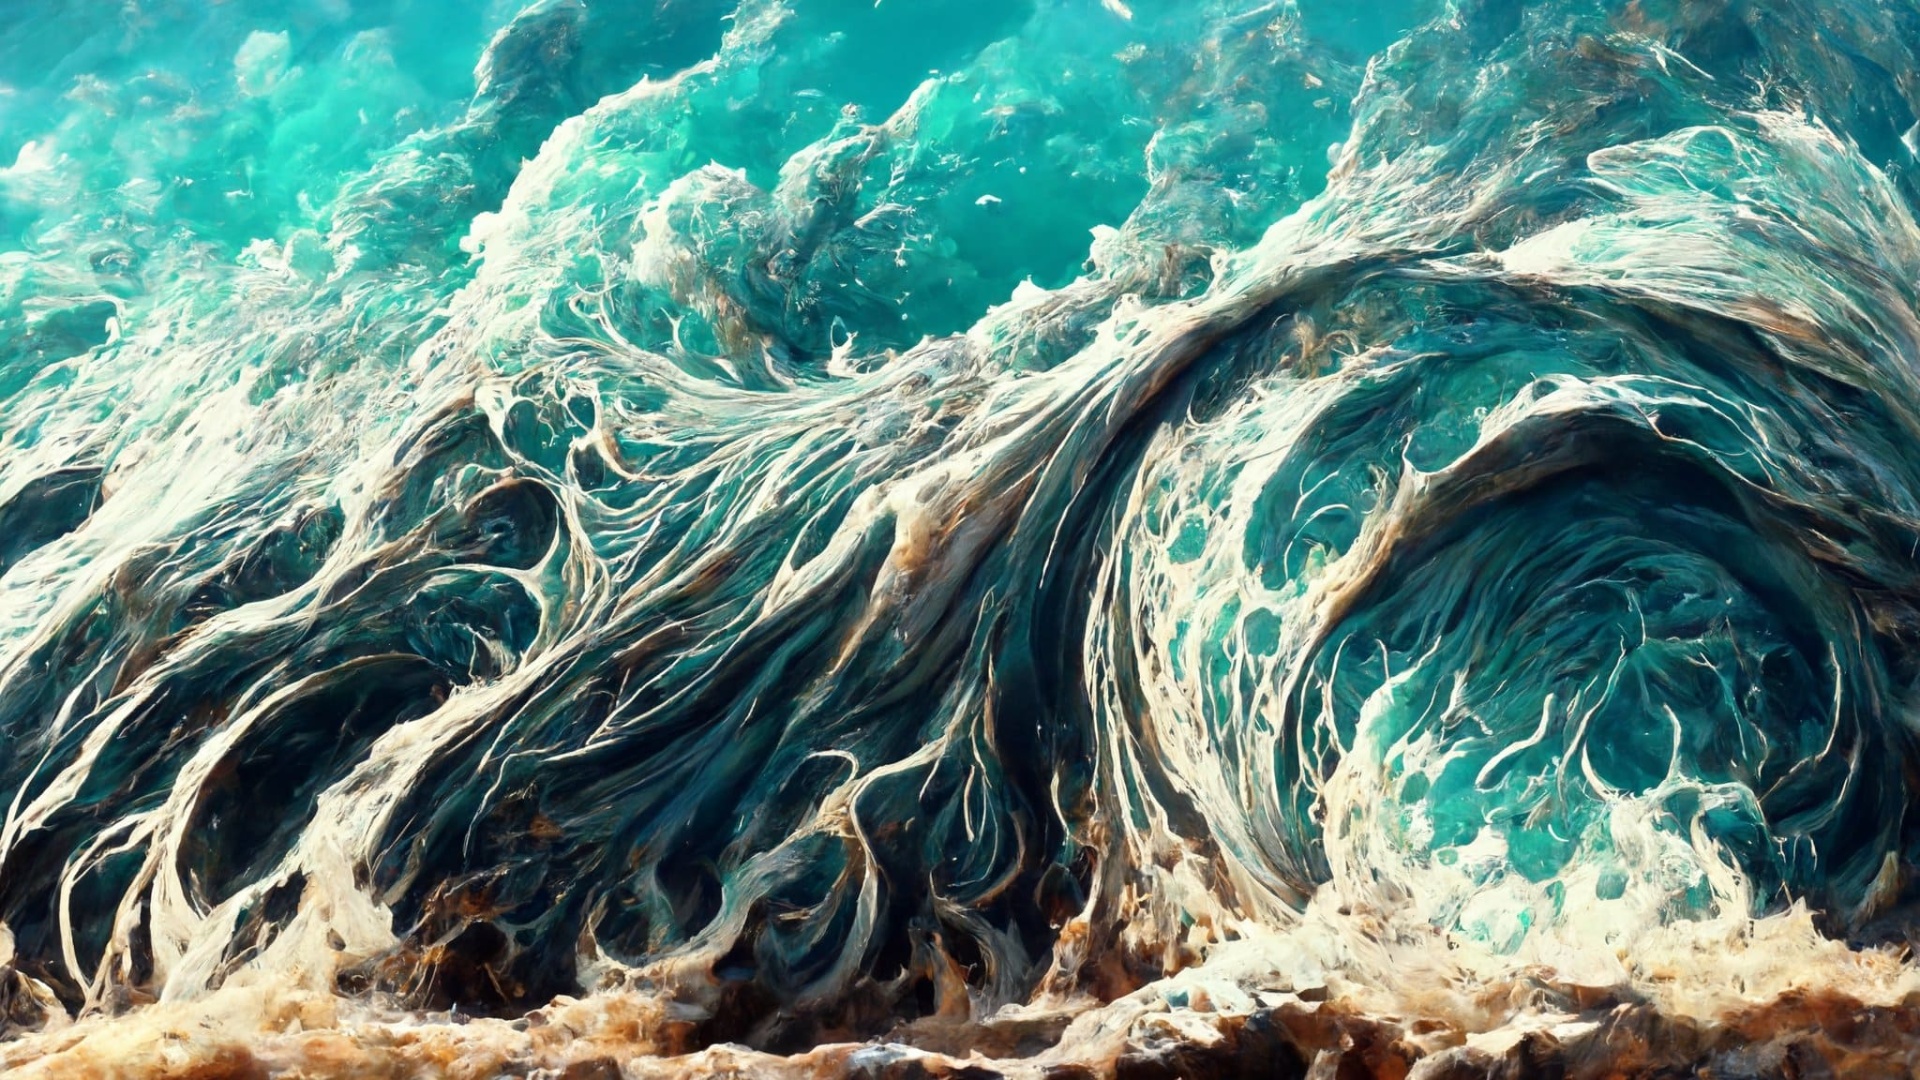 hd ocean waves wallpaper